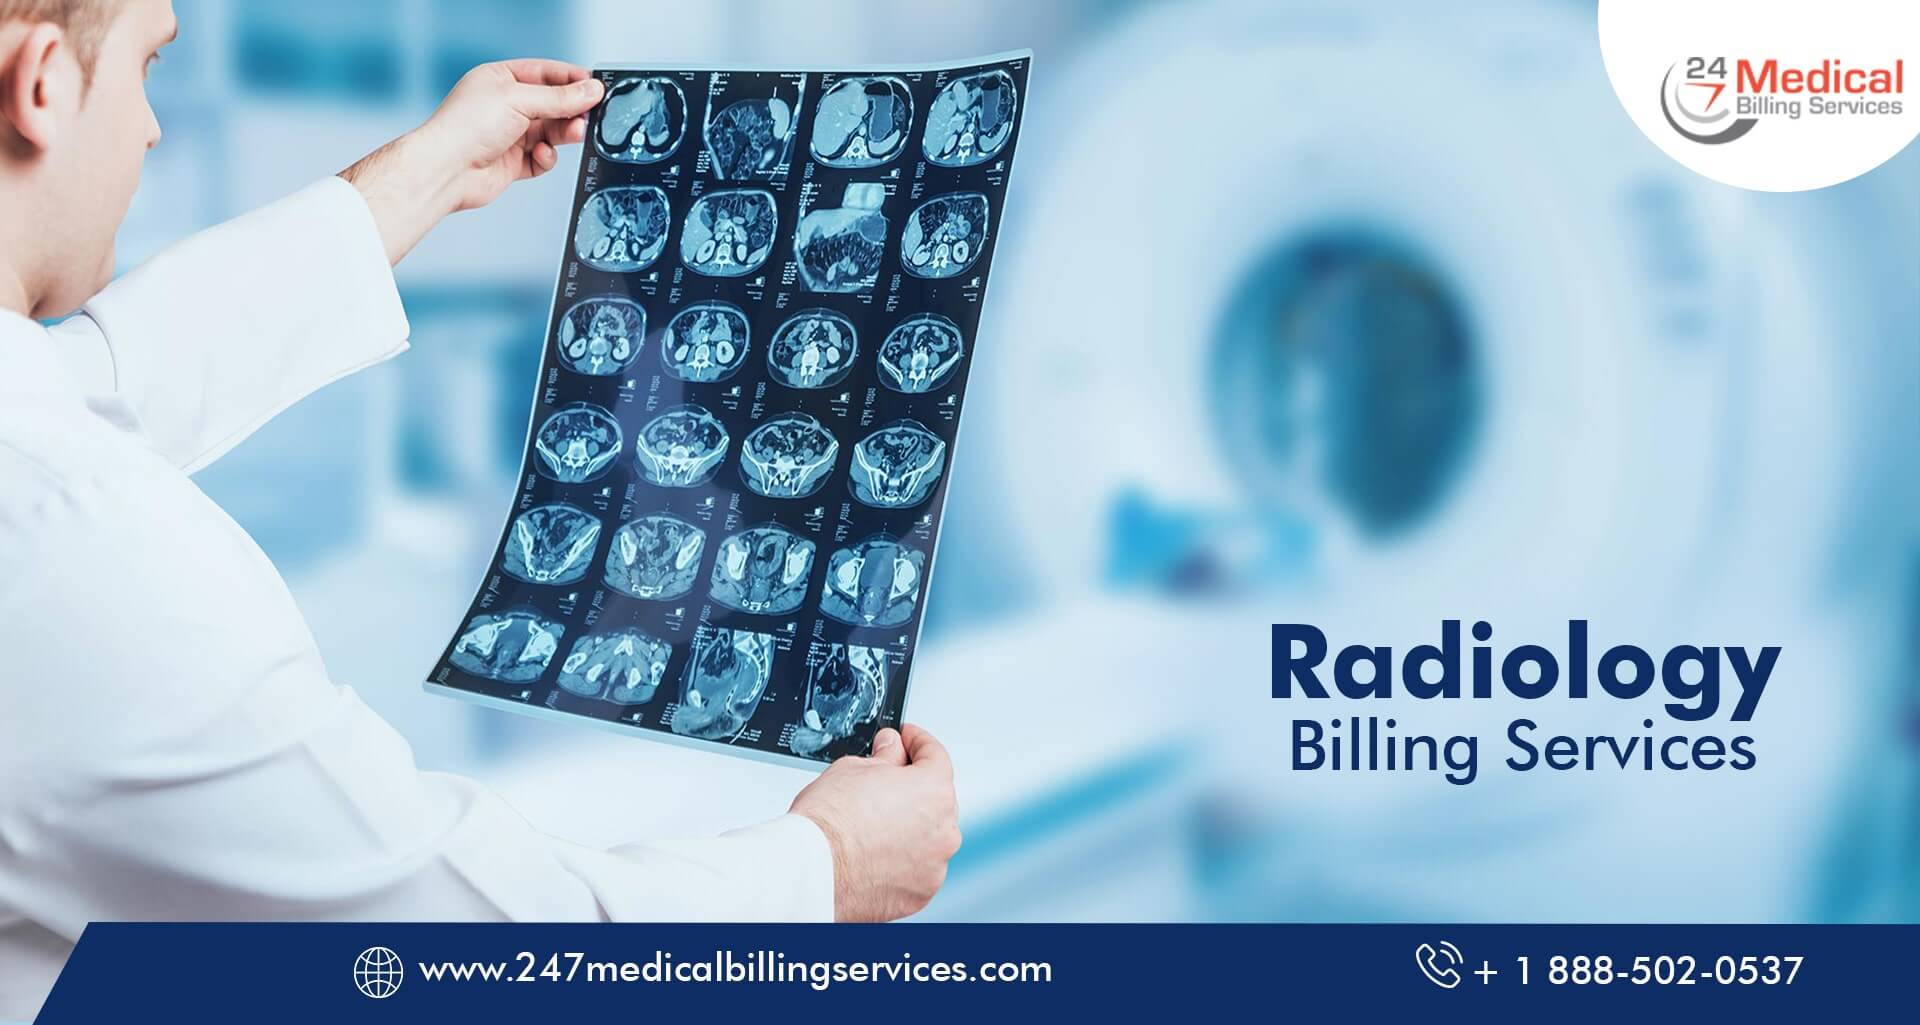  Radiology Billing Services in North Carolina (NC)